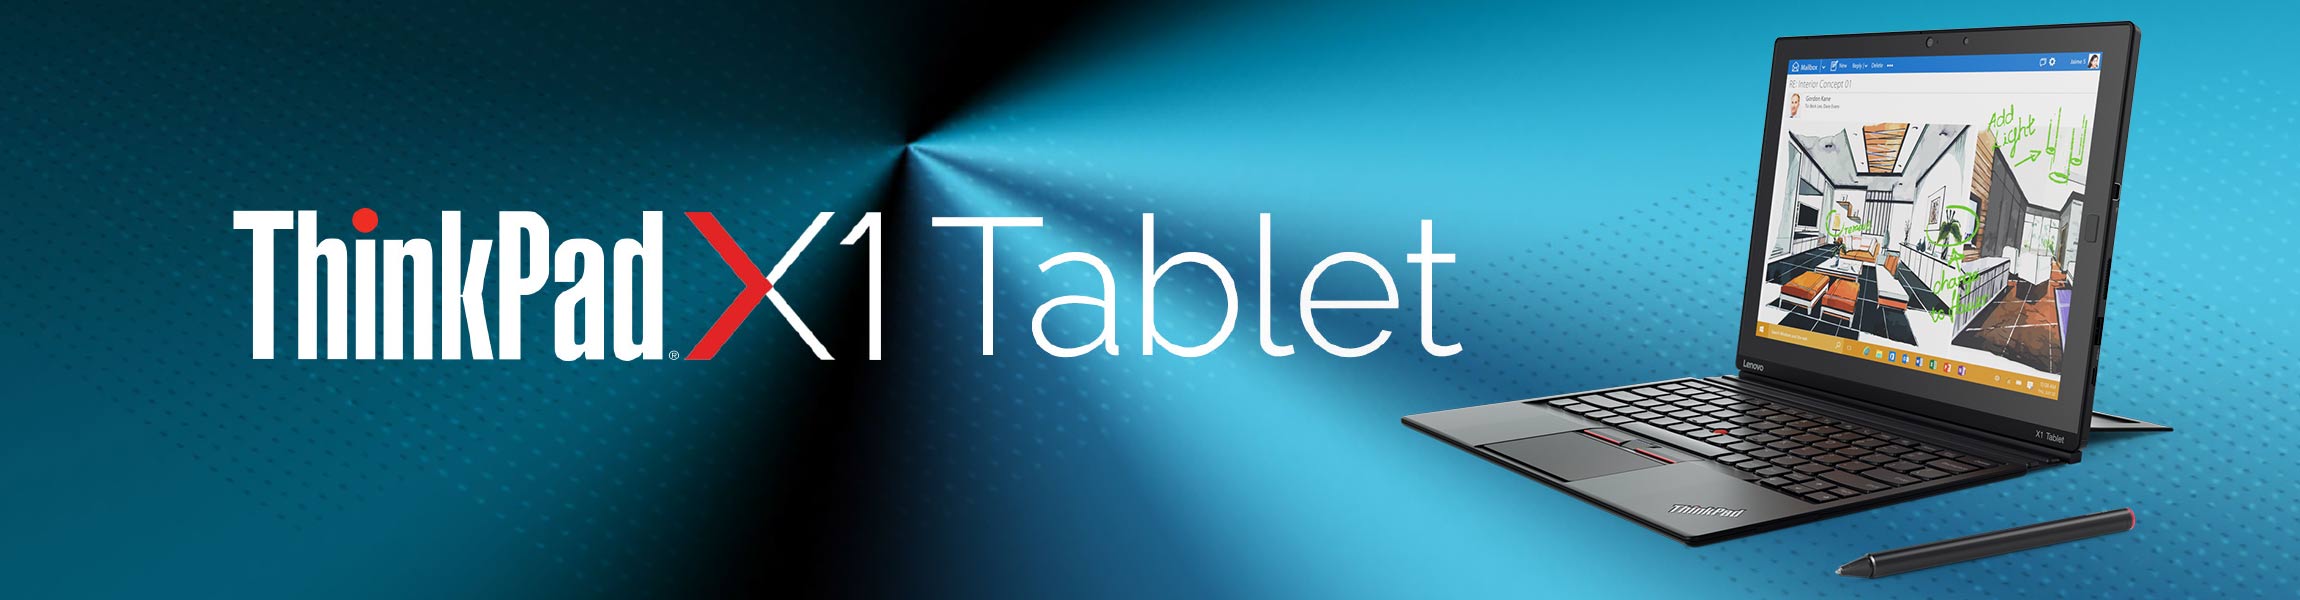 x1-tablet_2